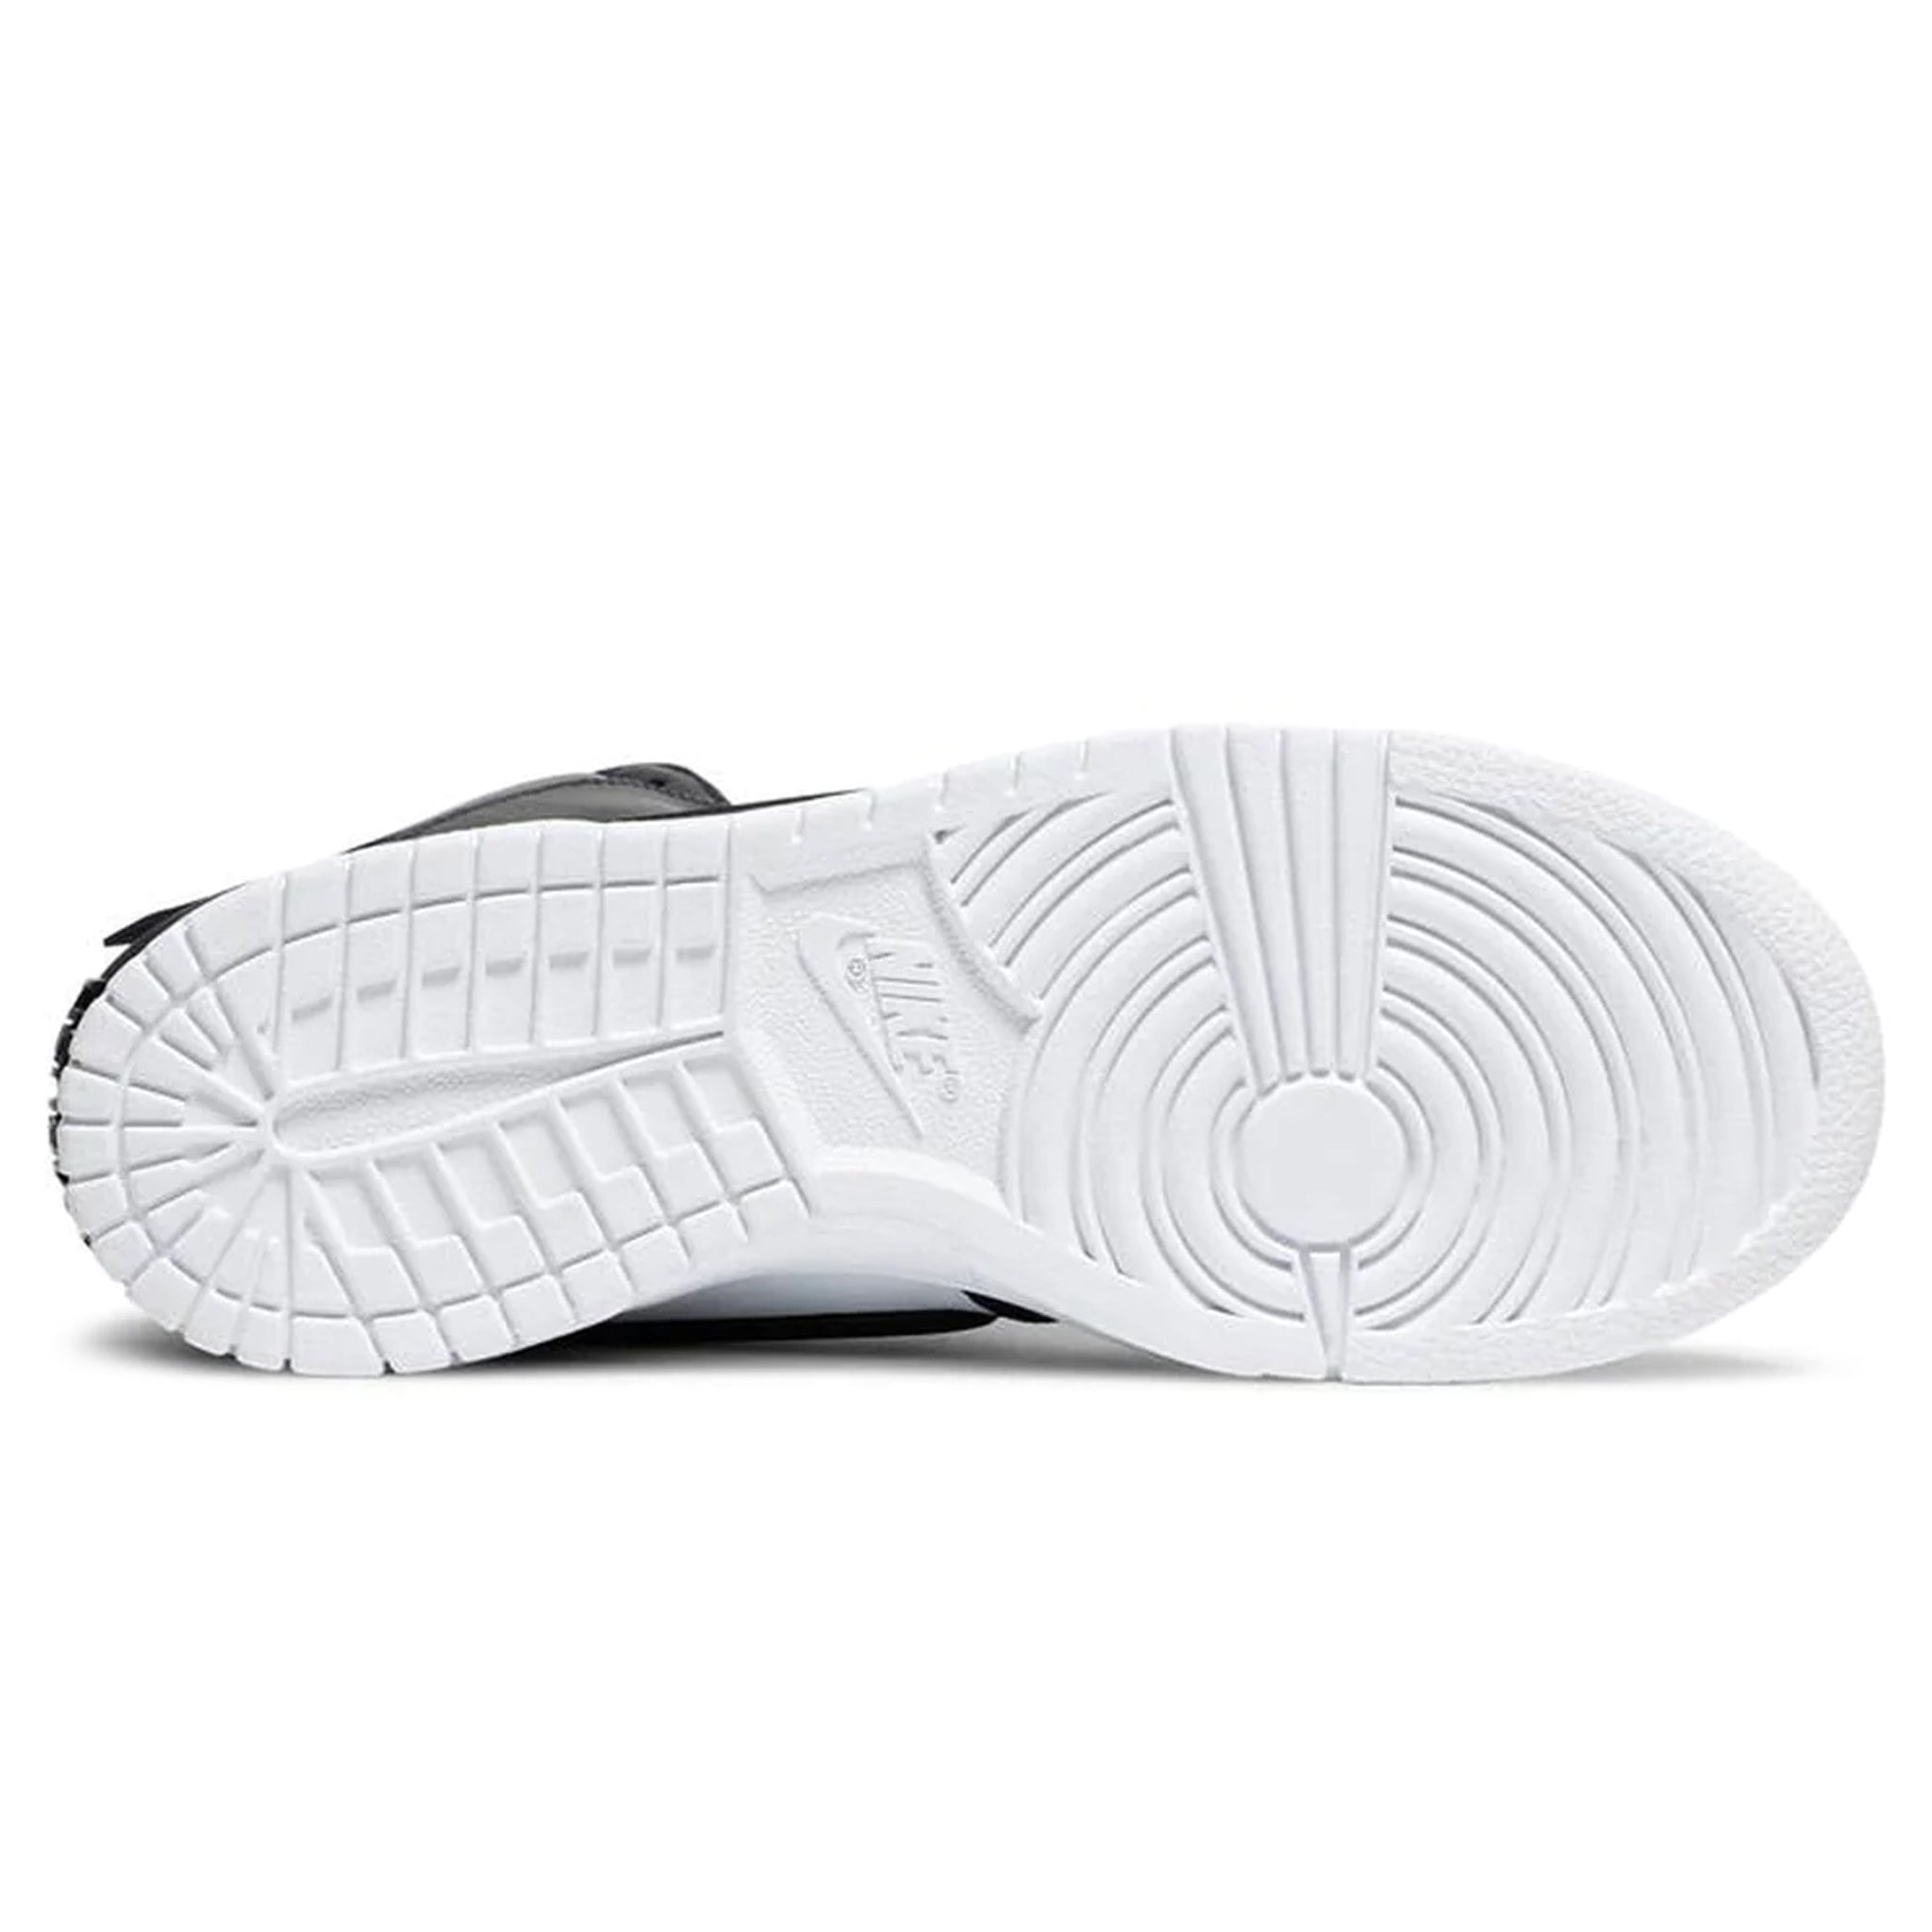 Sole view of Nike Dunk High Ambush Black White Sneaker CU7544-001